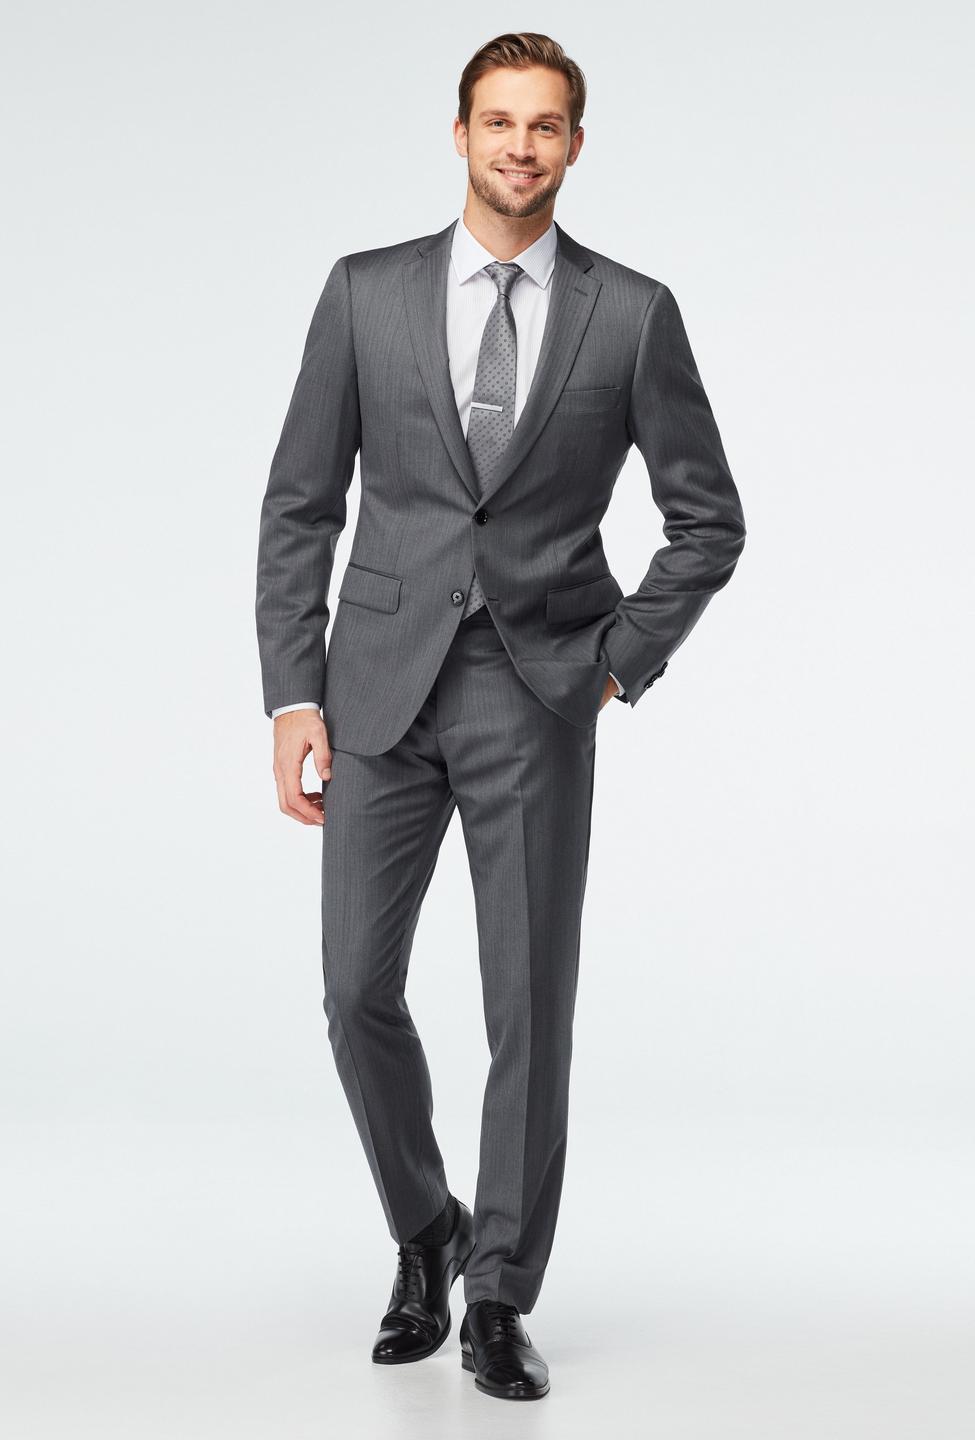 Gray suit - Highbridge Herringbone Design from Luxury Indochino Collection